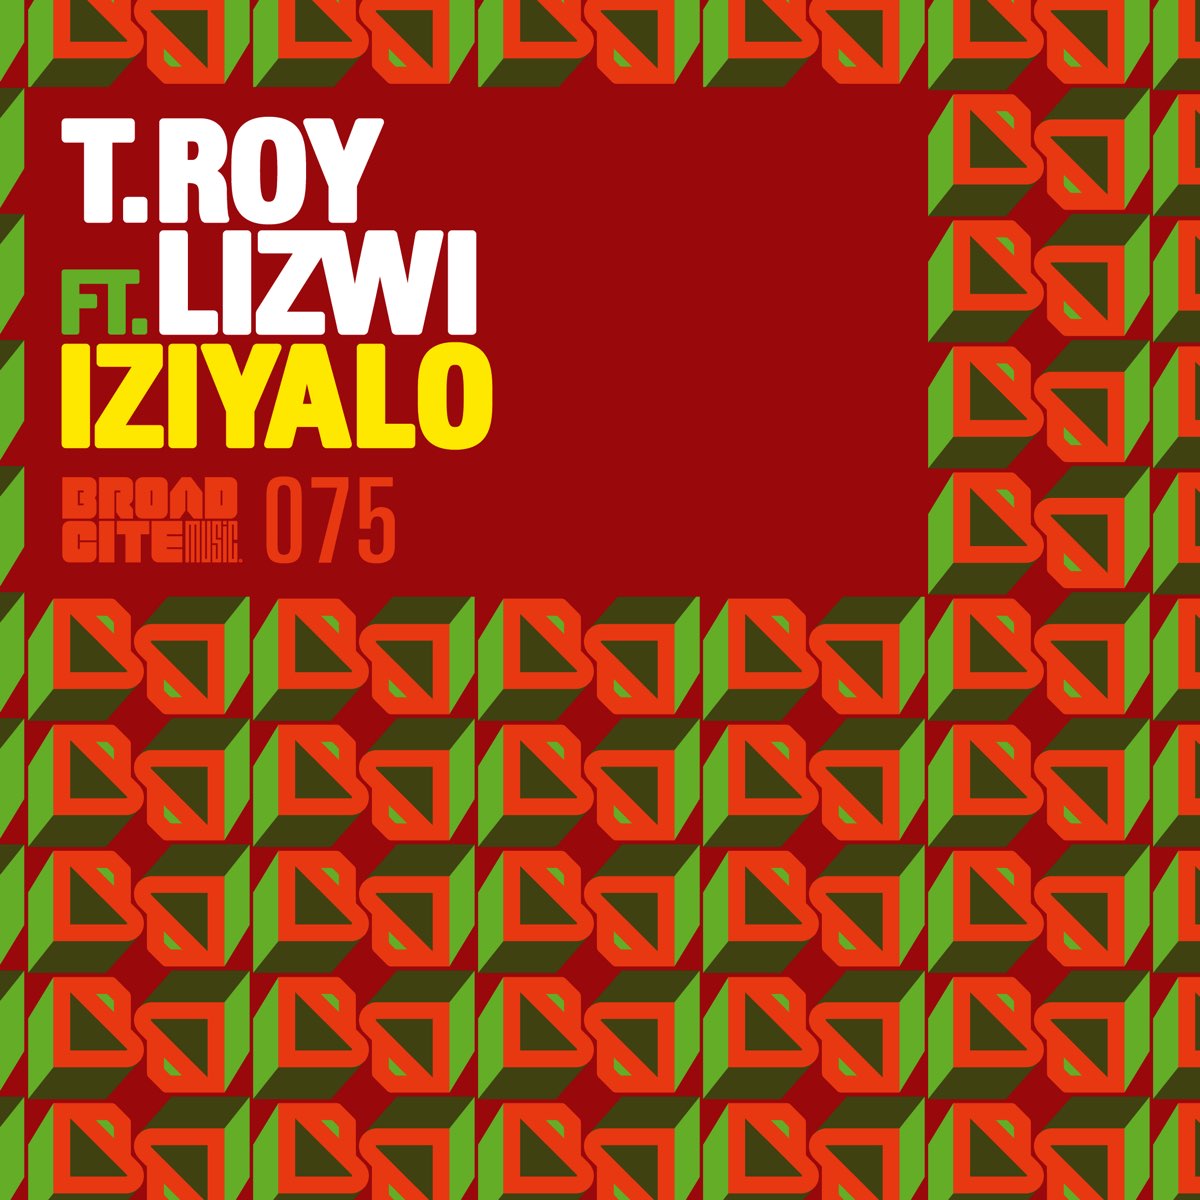 Joezi feat lizwi amathole перевод песни. T'Roy. Lizwi. S'T'Roy Mix. Waves & WAVS (feat. Lizwi) от Ahmed Spins.